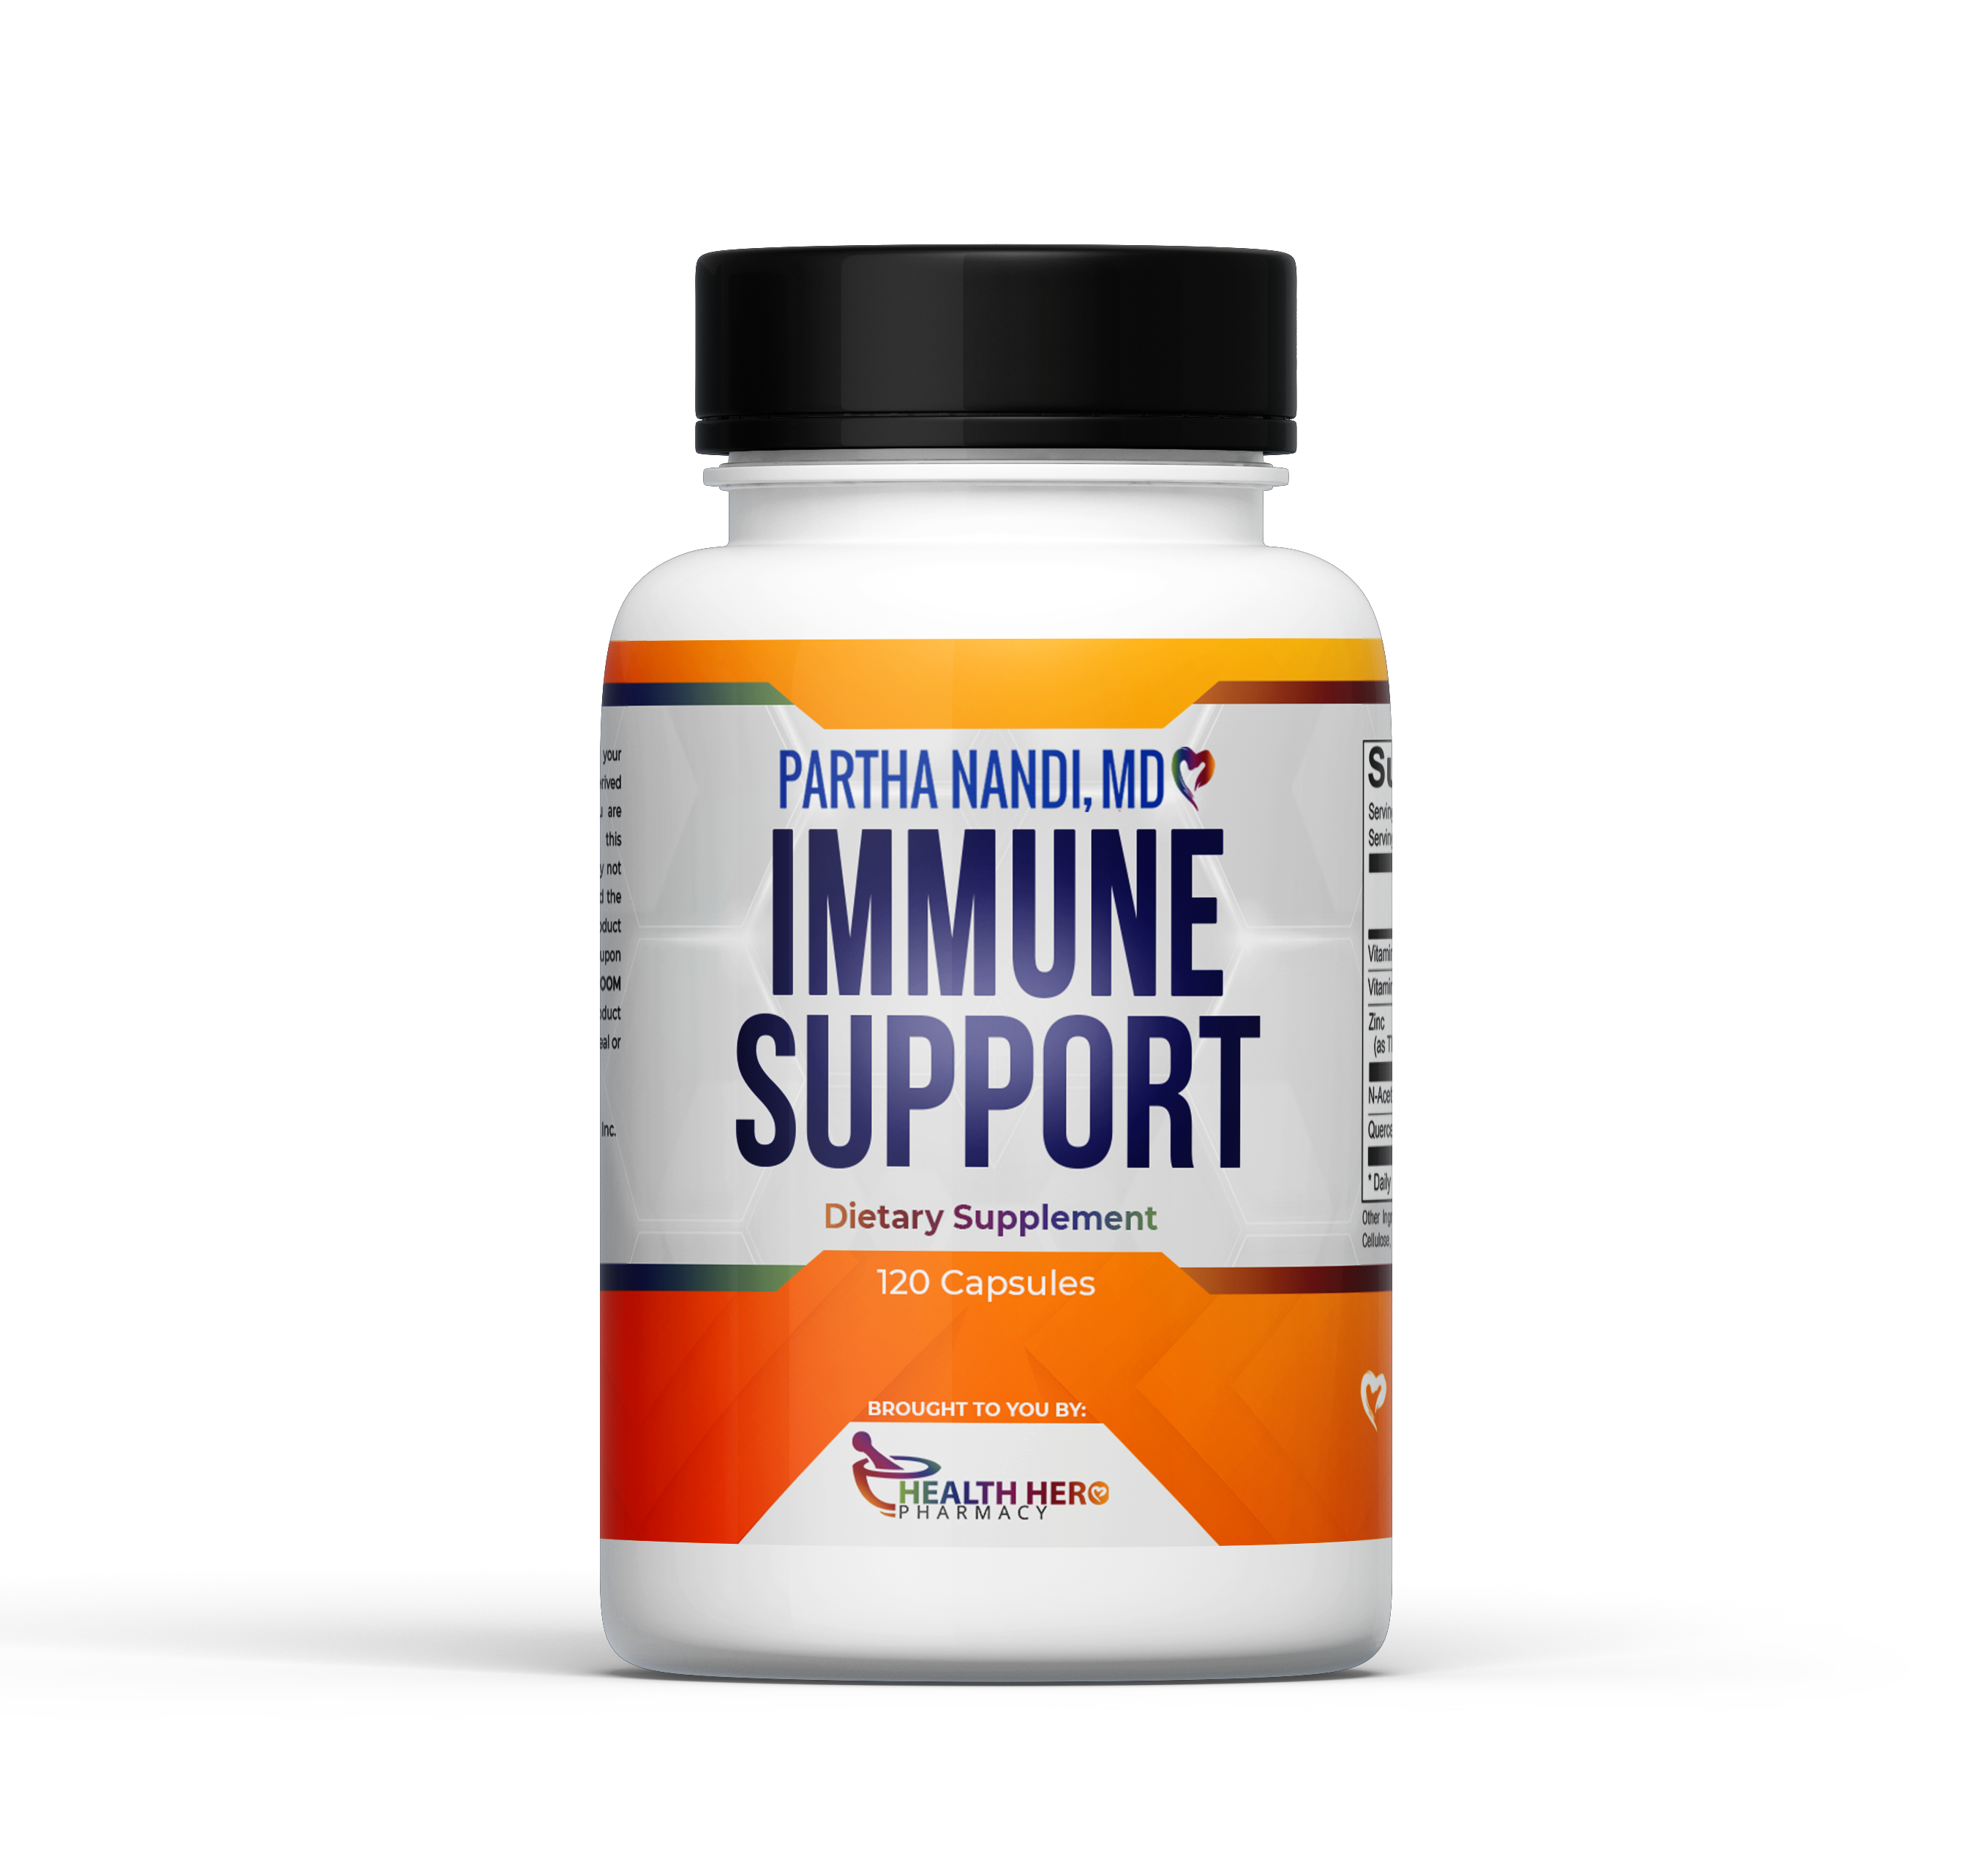 Immune Health